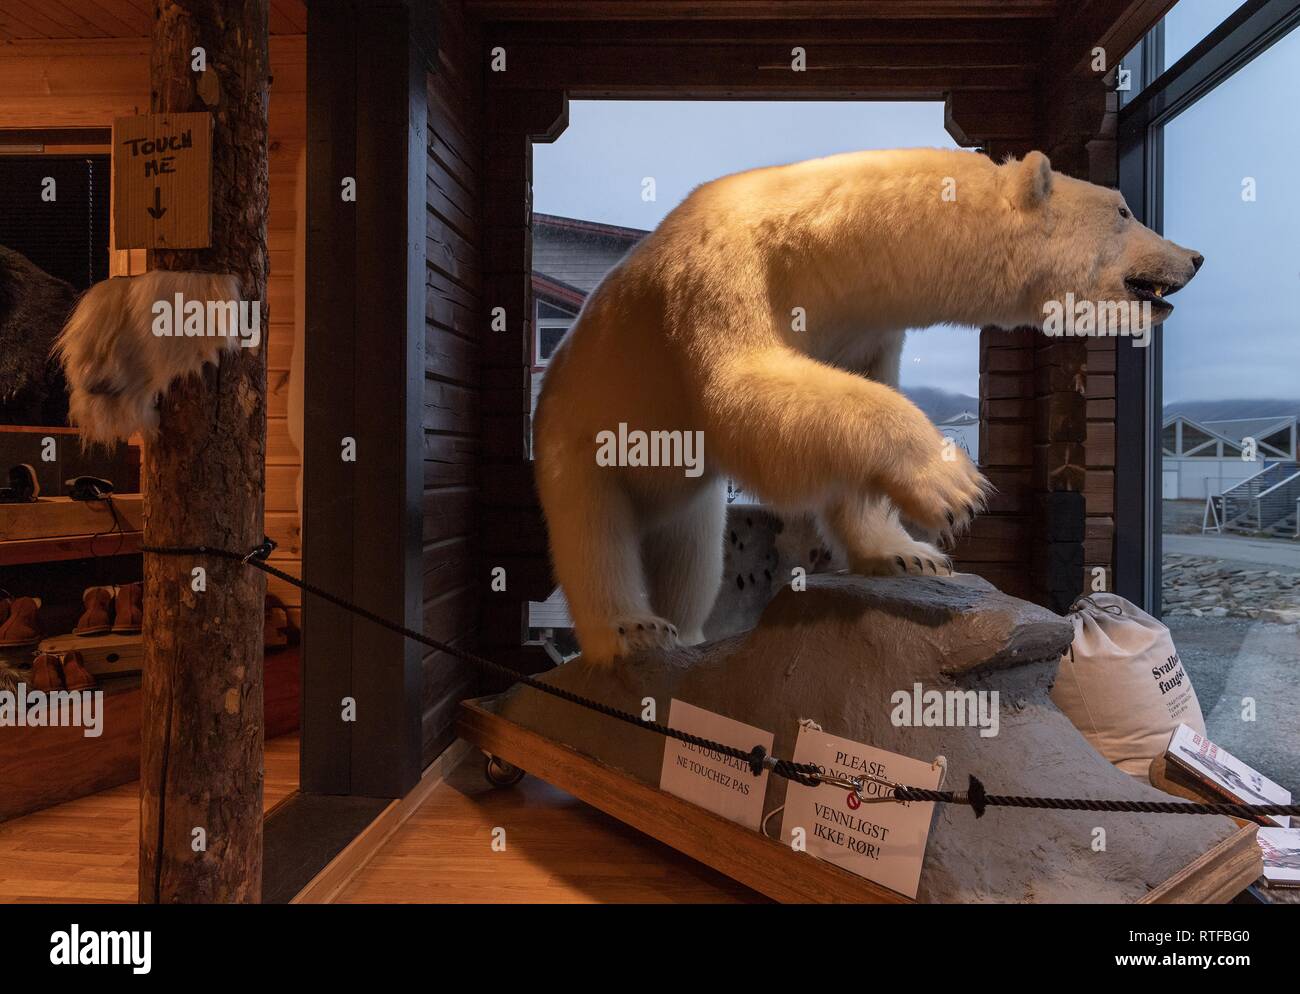 Rellena el oso polar (Ursus maritimus), Tienda, Longyearbyen Spitsbergen, Svalbard, Noruega Foto de stock